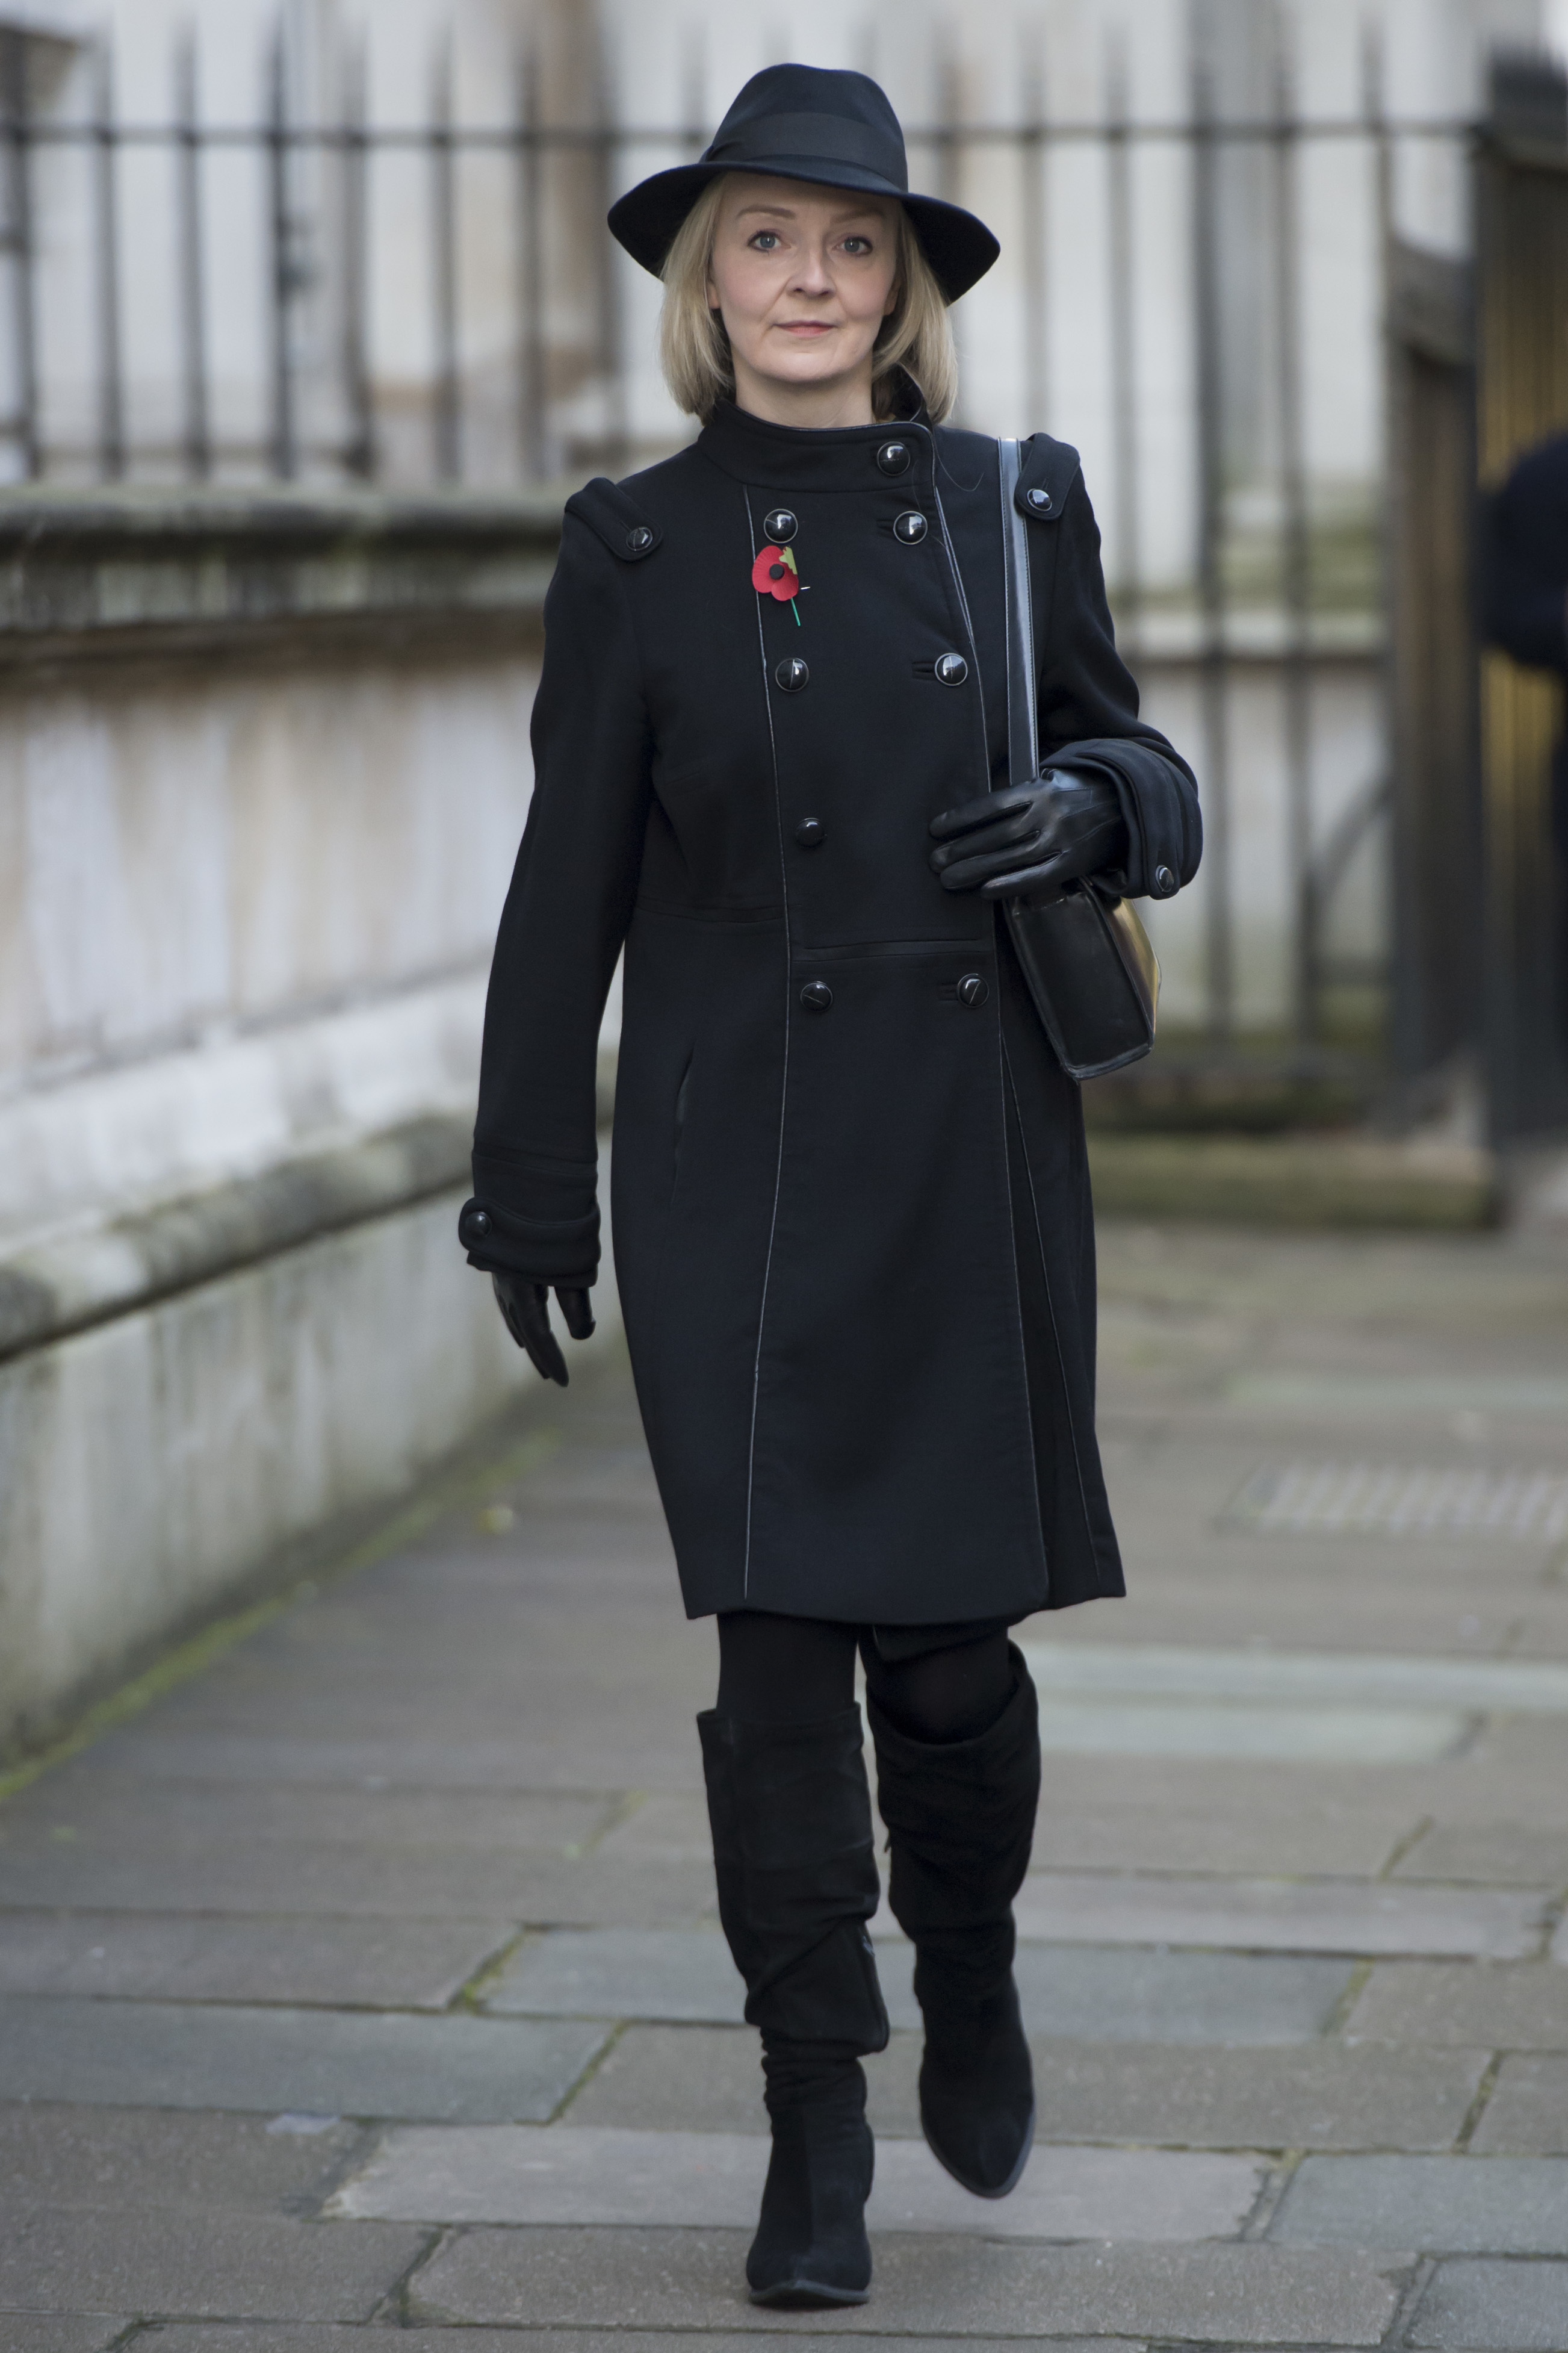 Then Justice Secretary Liz Truss walks through Downing Street, in 2016